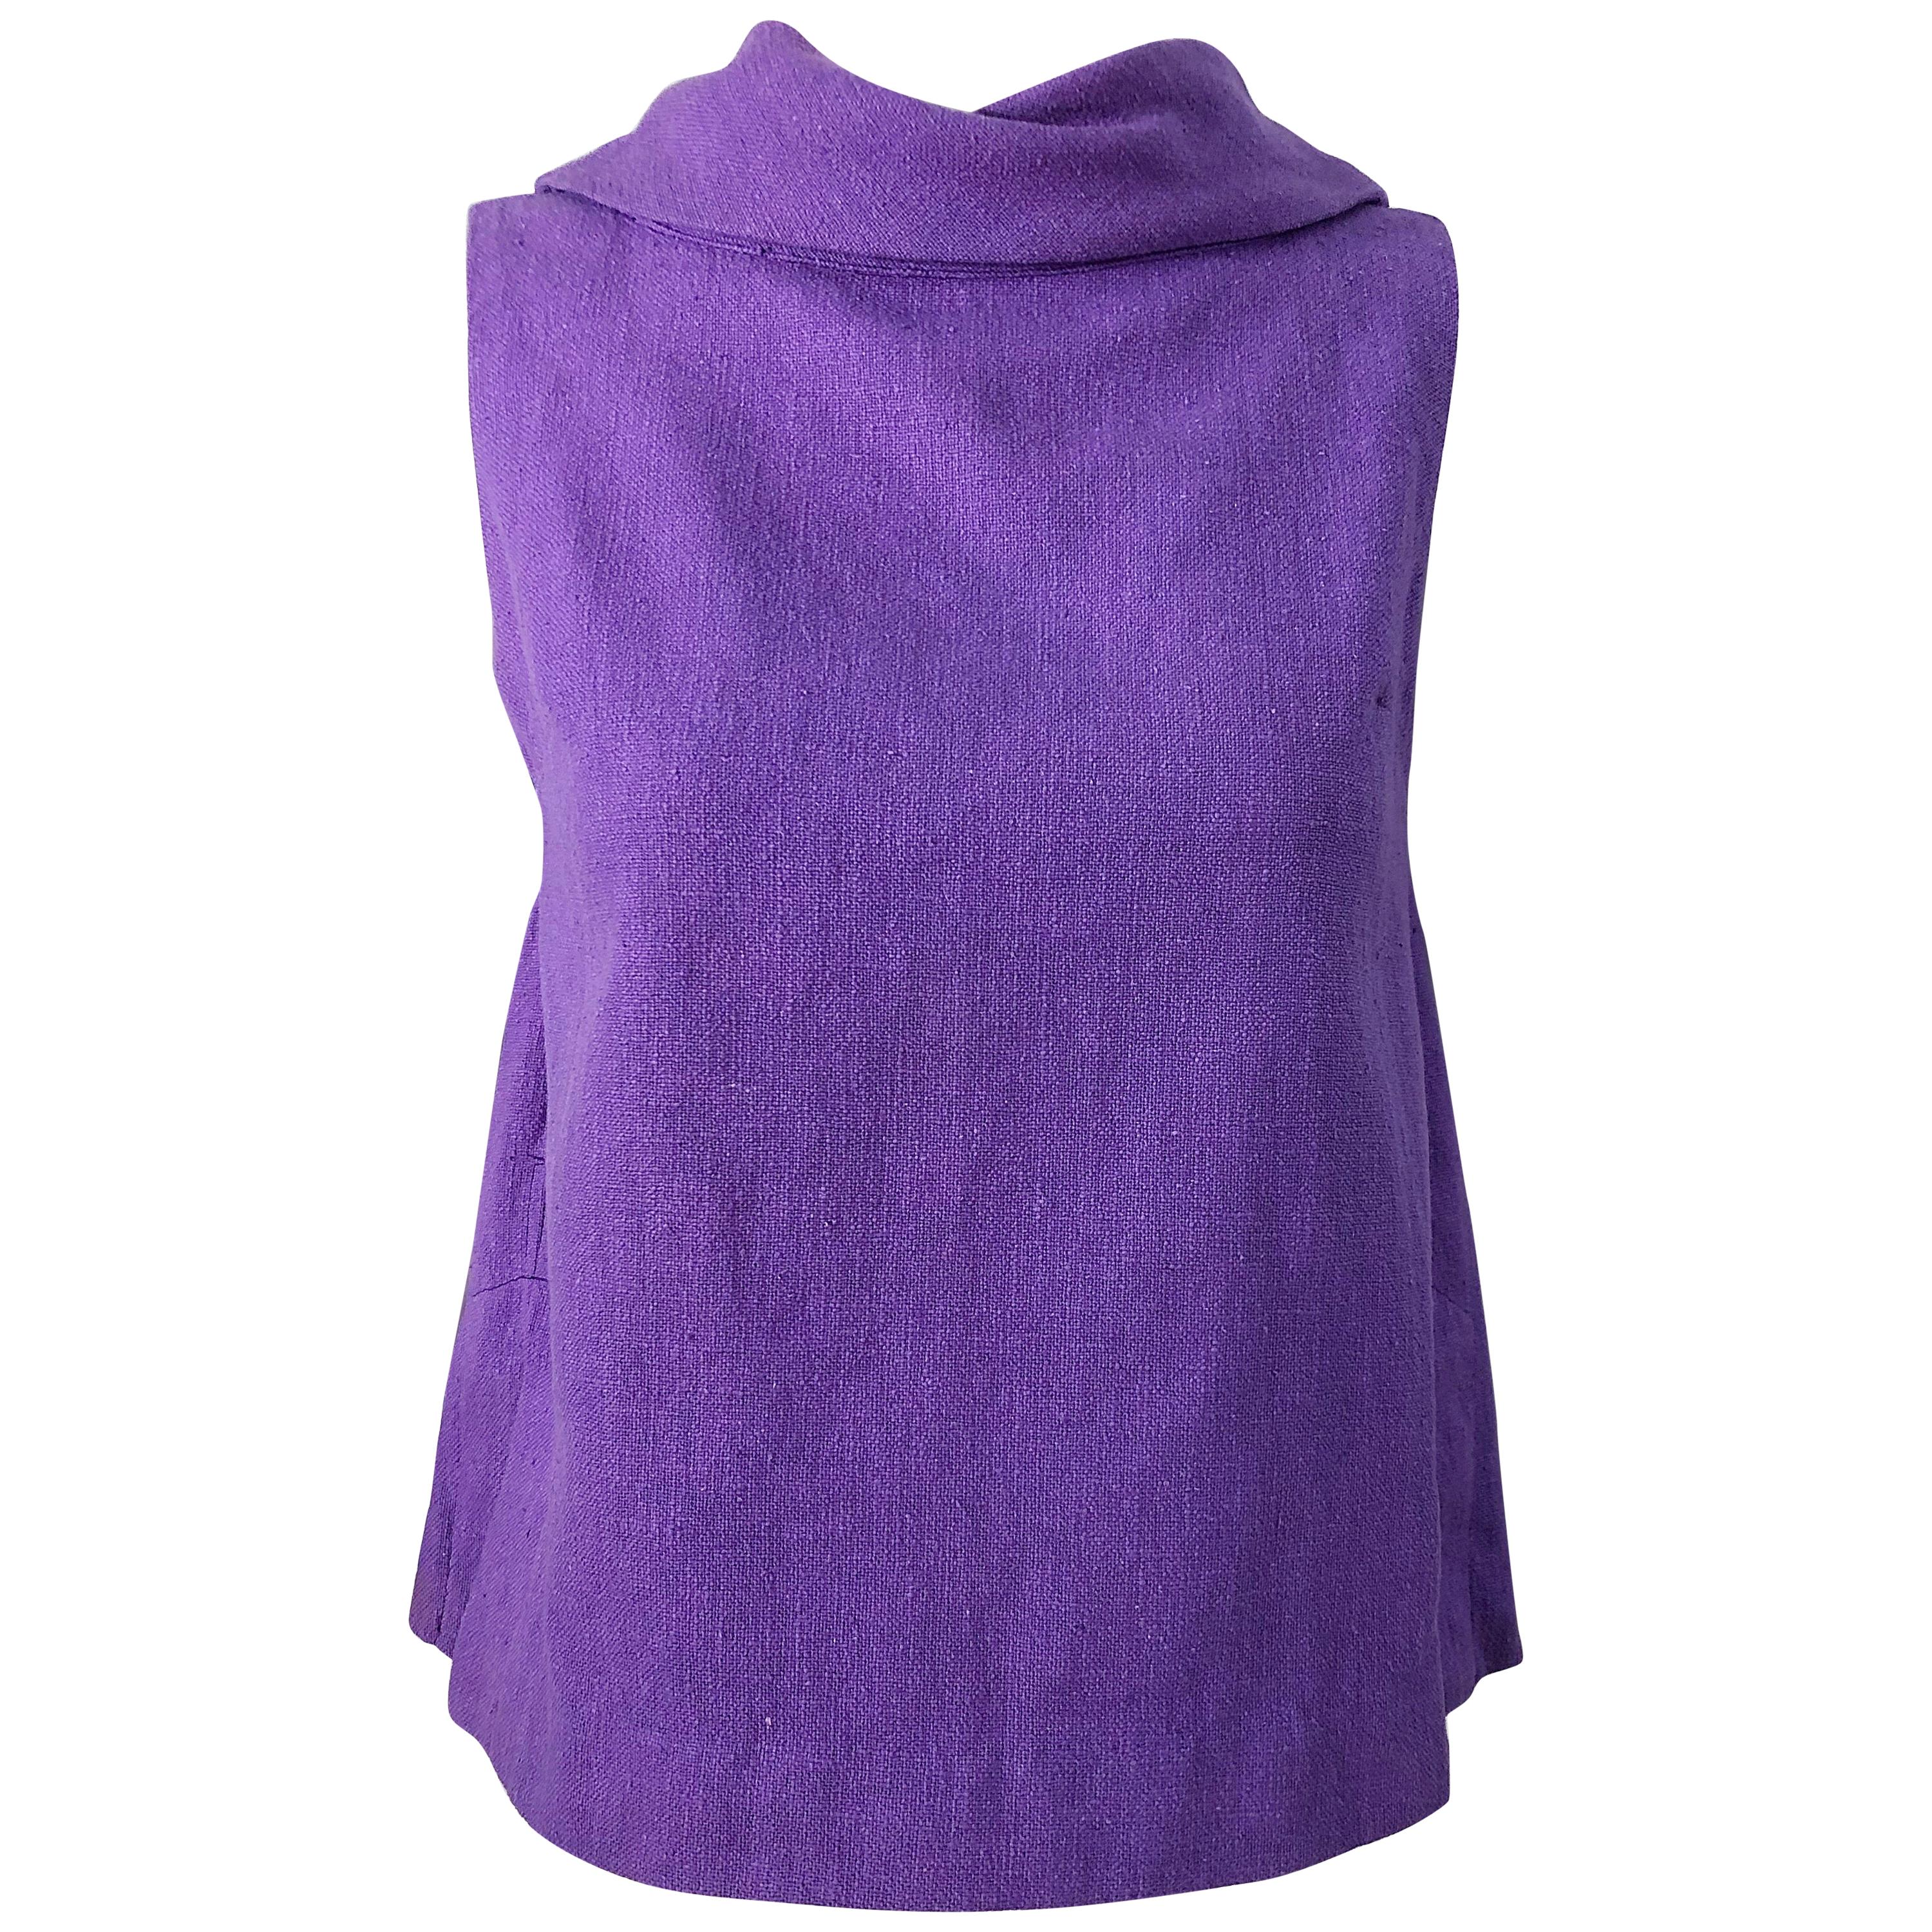 Chic 1960s Purple Linen Empire Waist Vintage 60s A Line Sleeveless Top Shirt